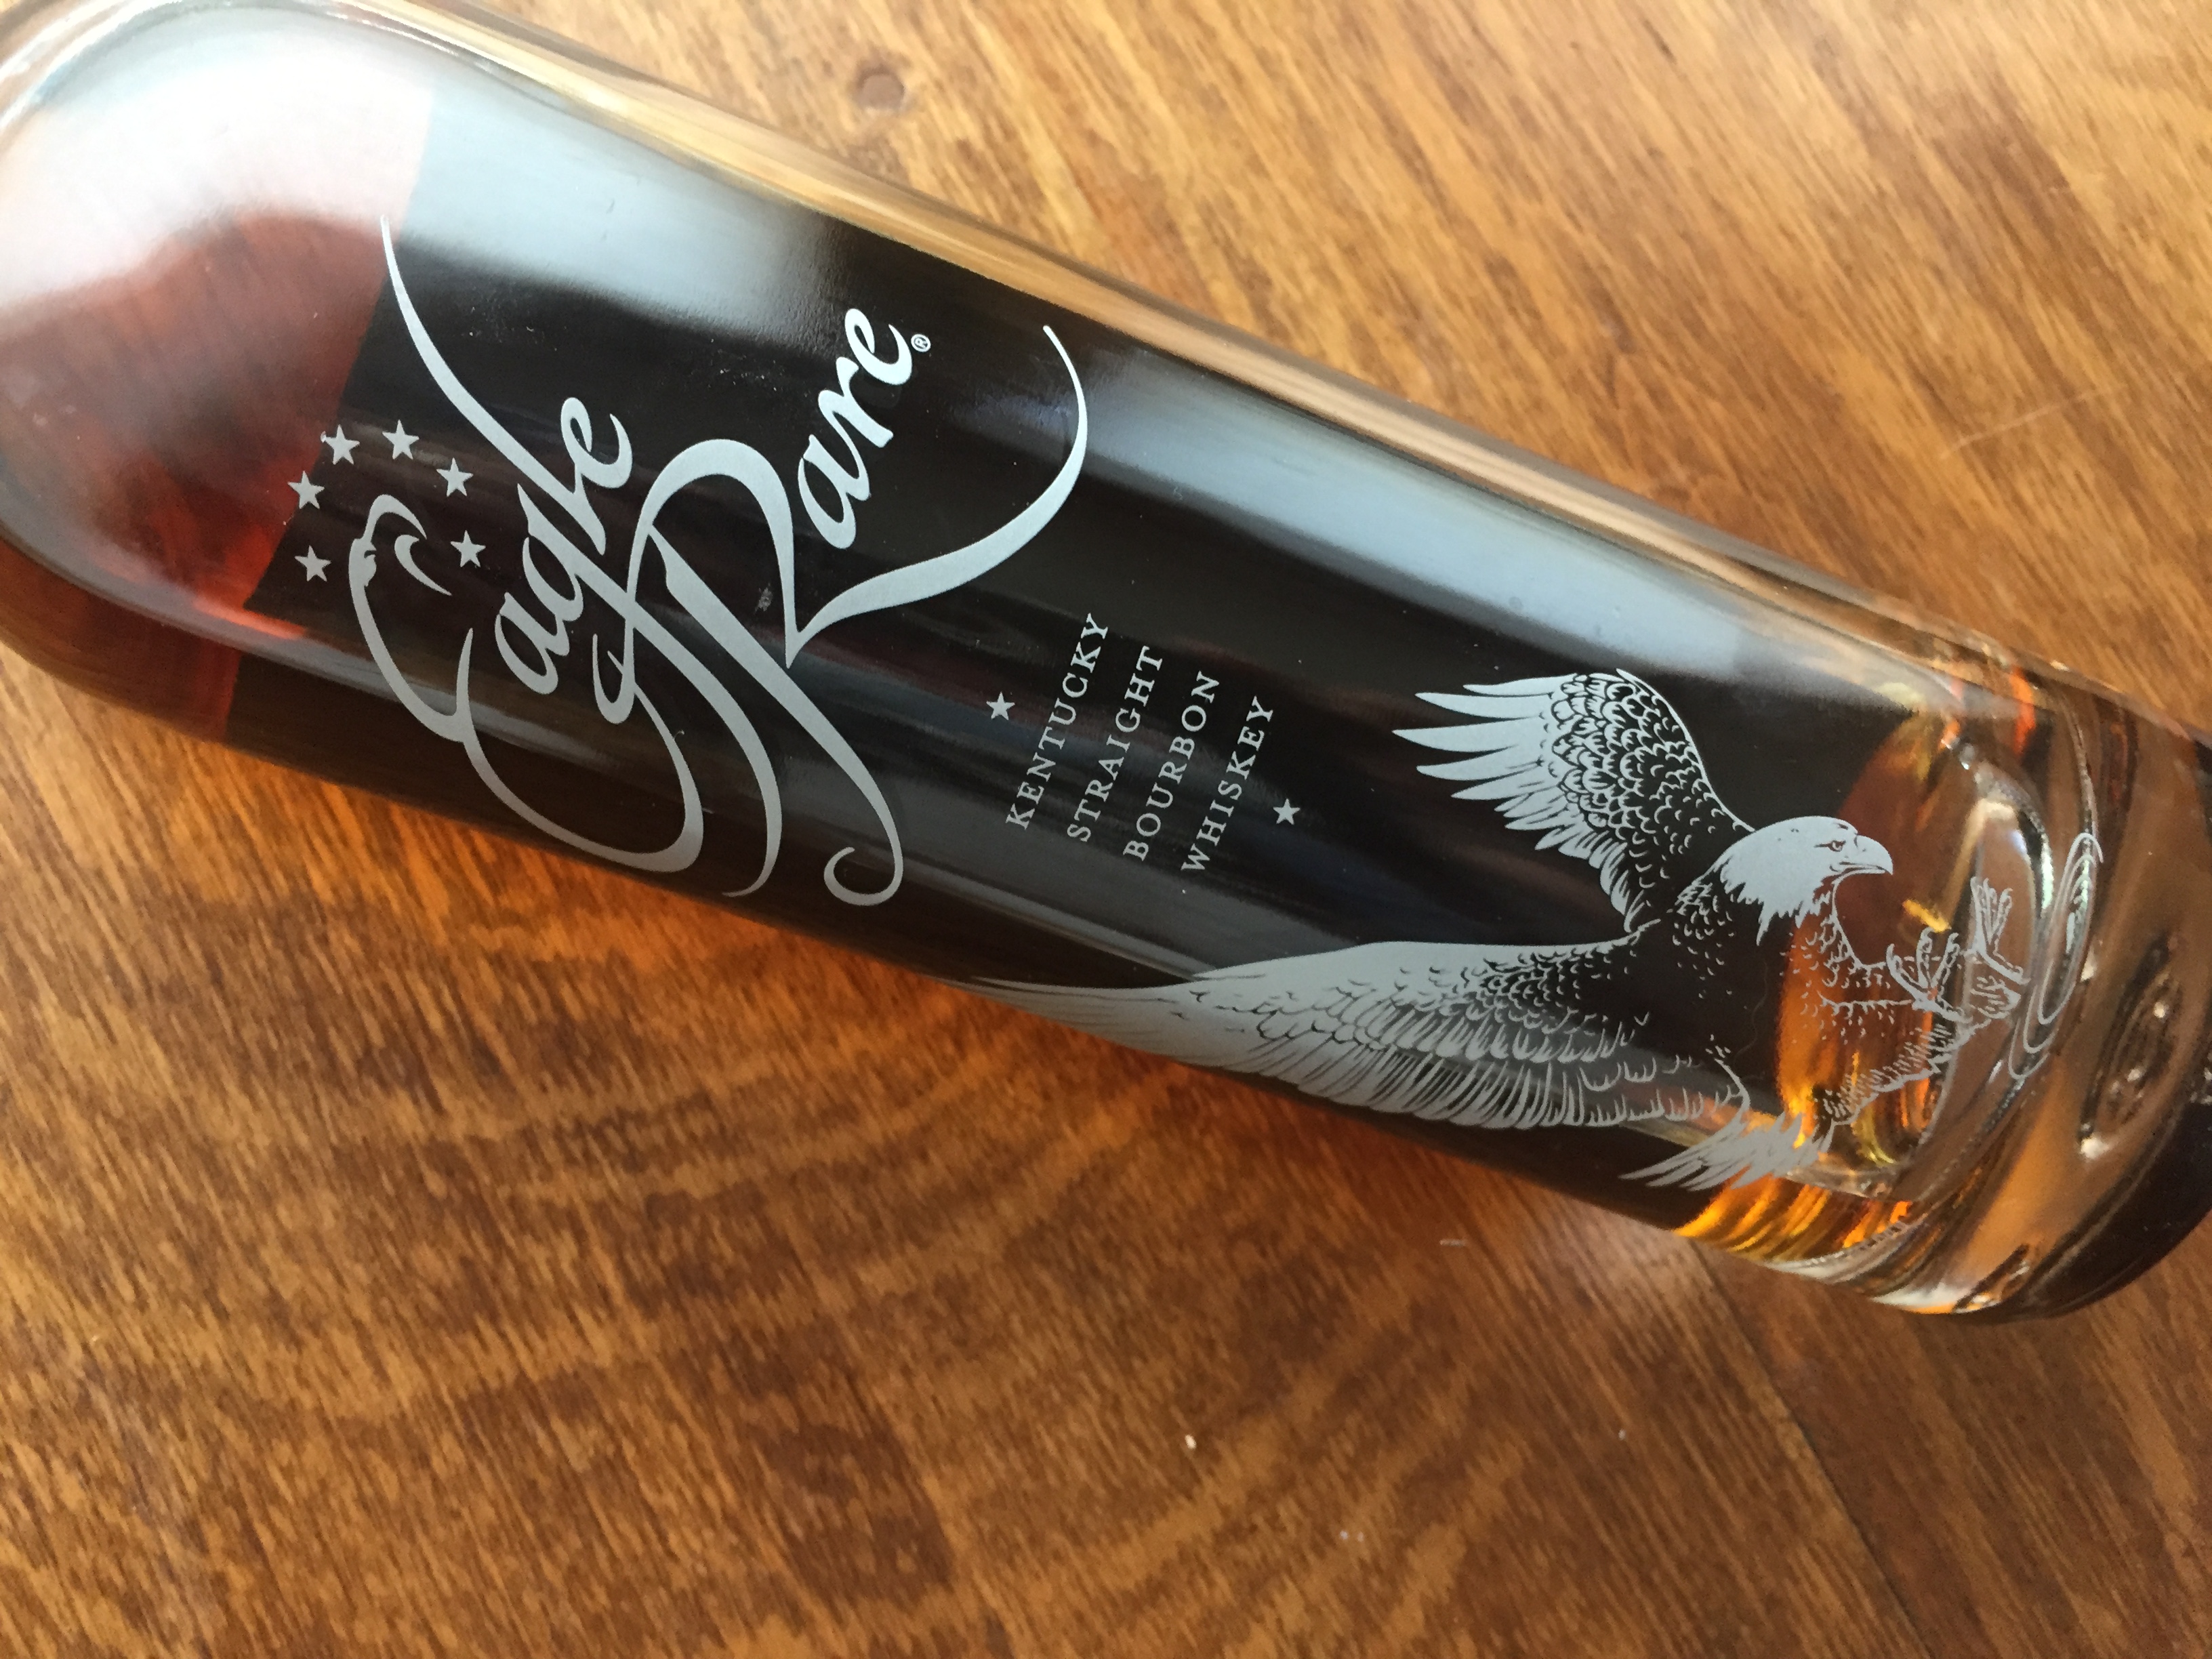 Eagle Rare 10 Year Bourbon